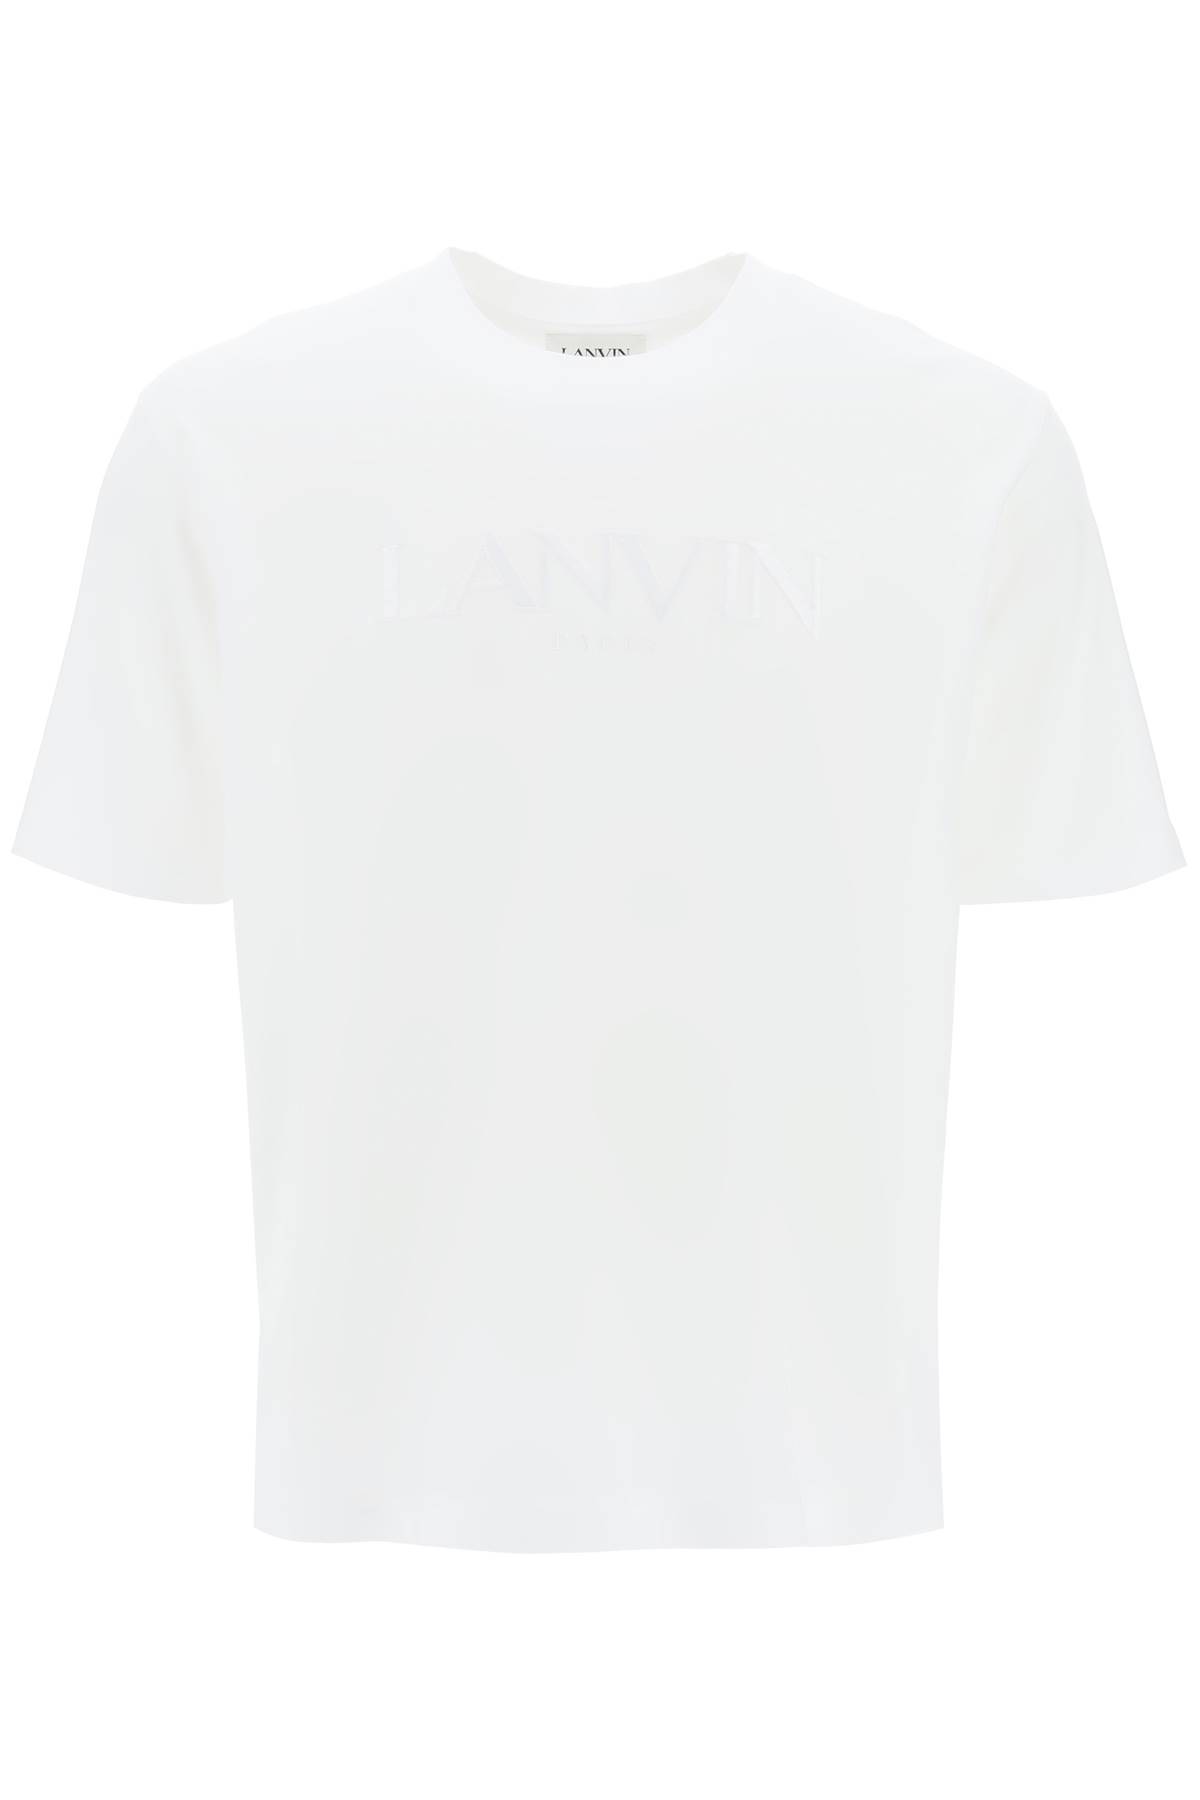 Lanvin LANVIN embroidered logo t-shirt